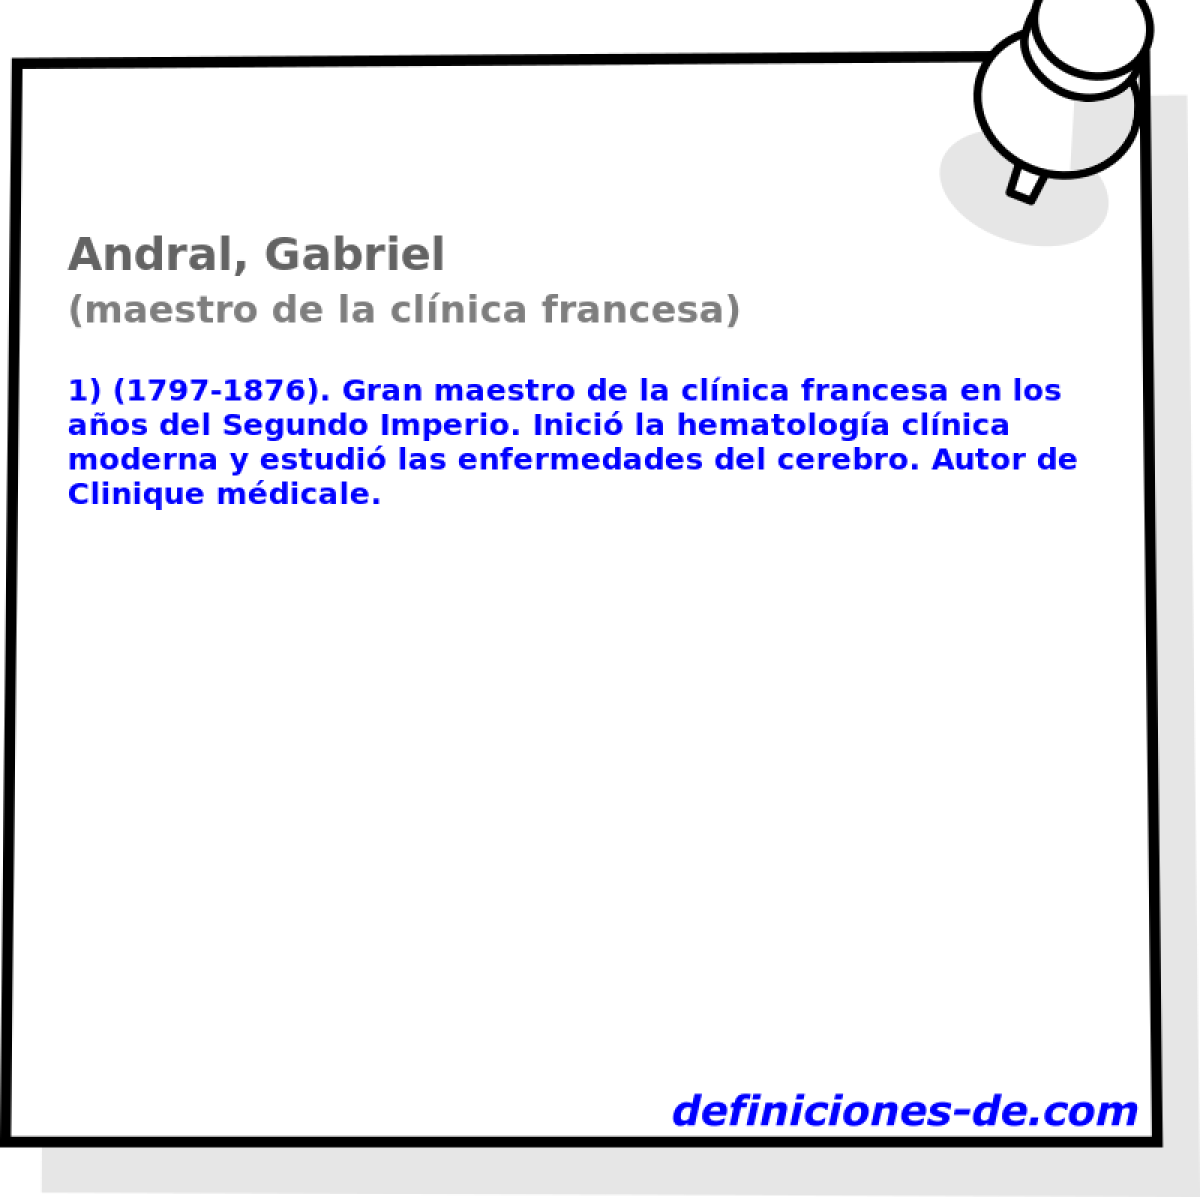 Andral, Gabriel (maestro de la clnica francesa)